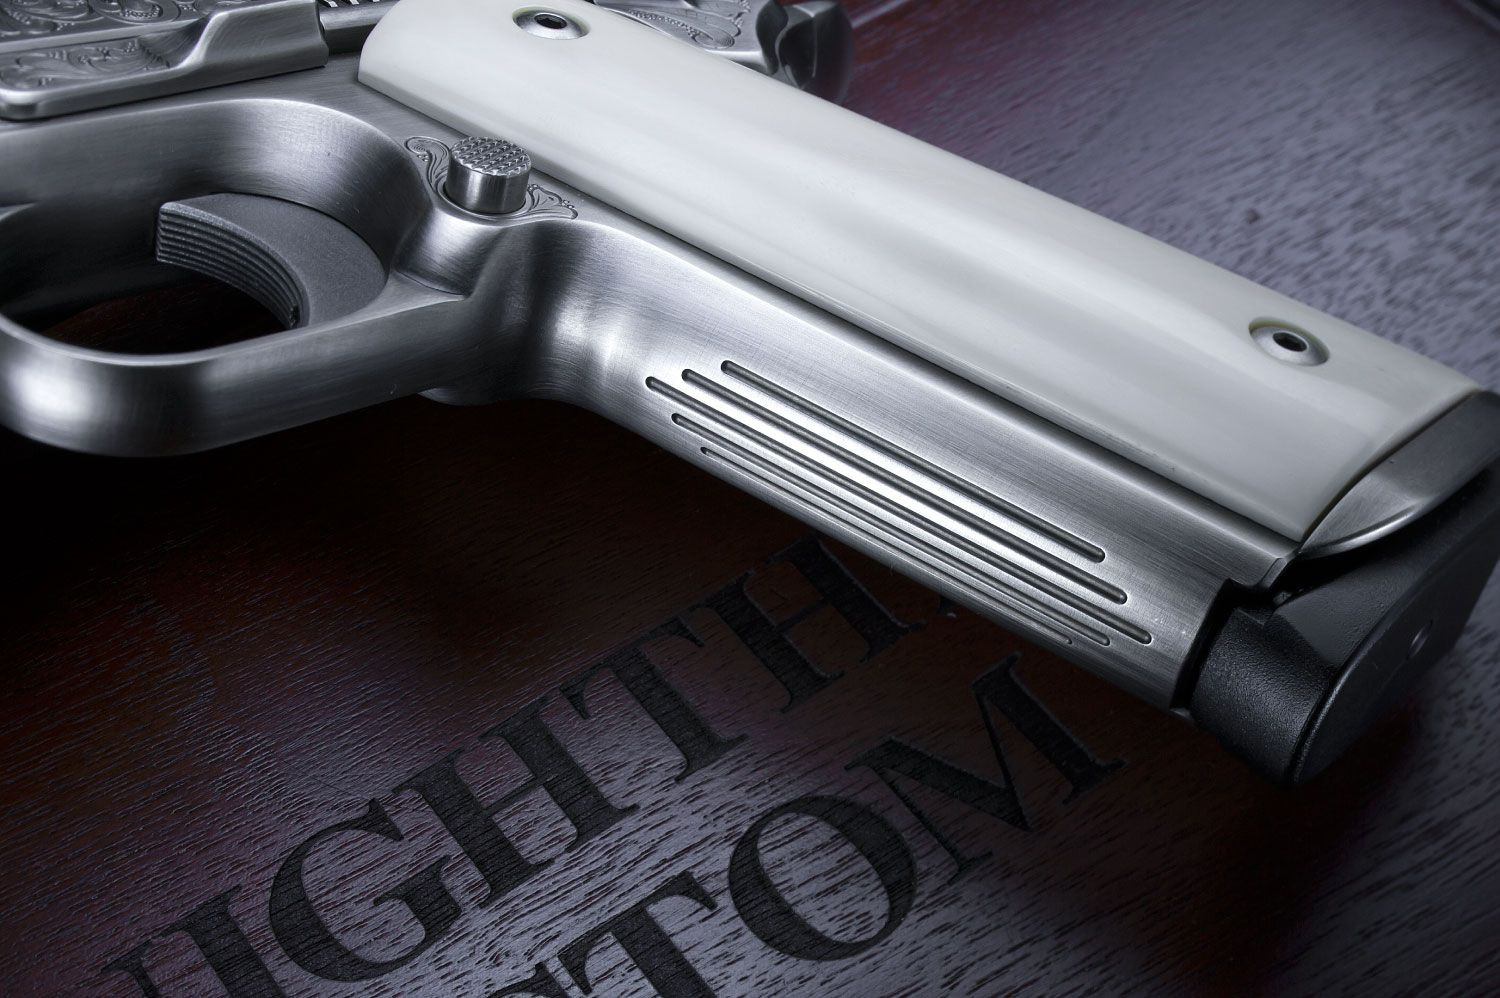 Nighthawk Custom VIP 1911 Pistol